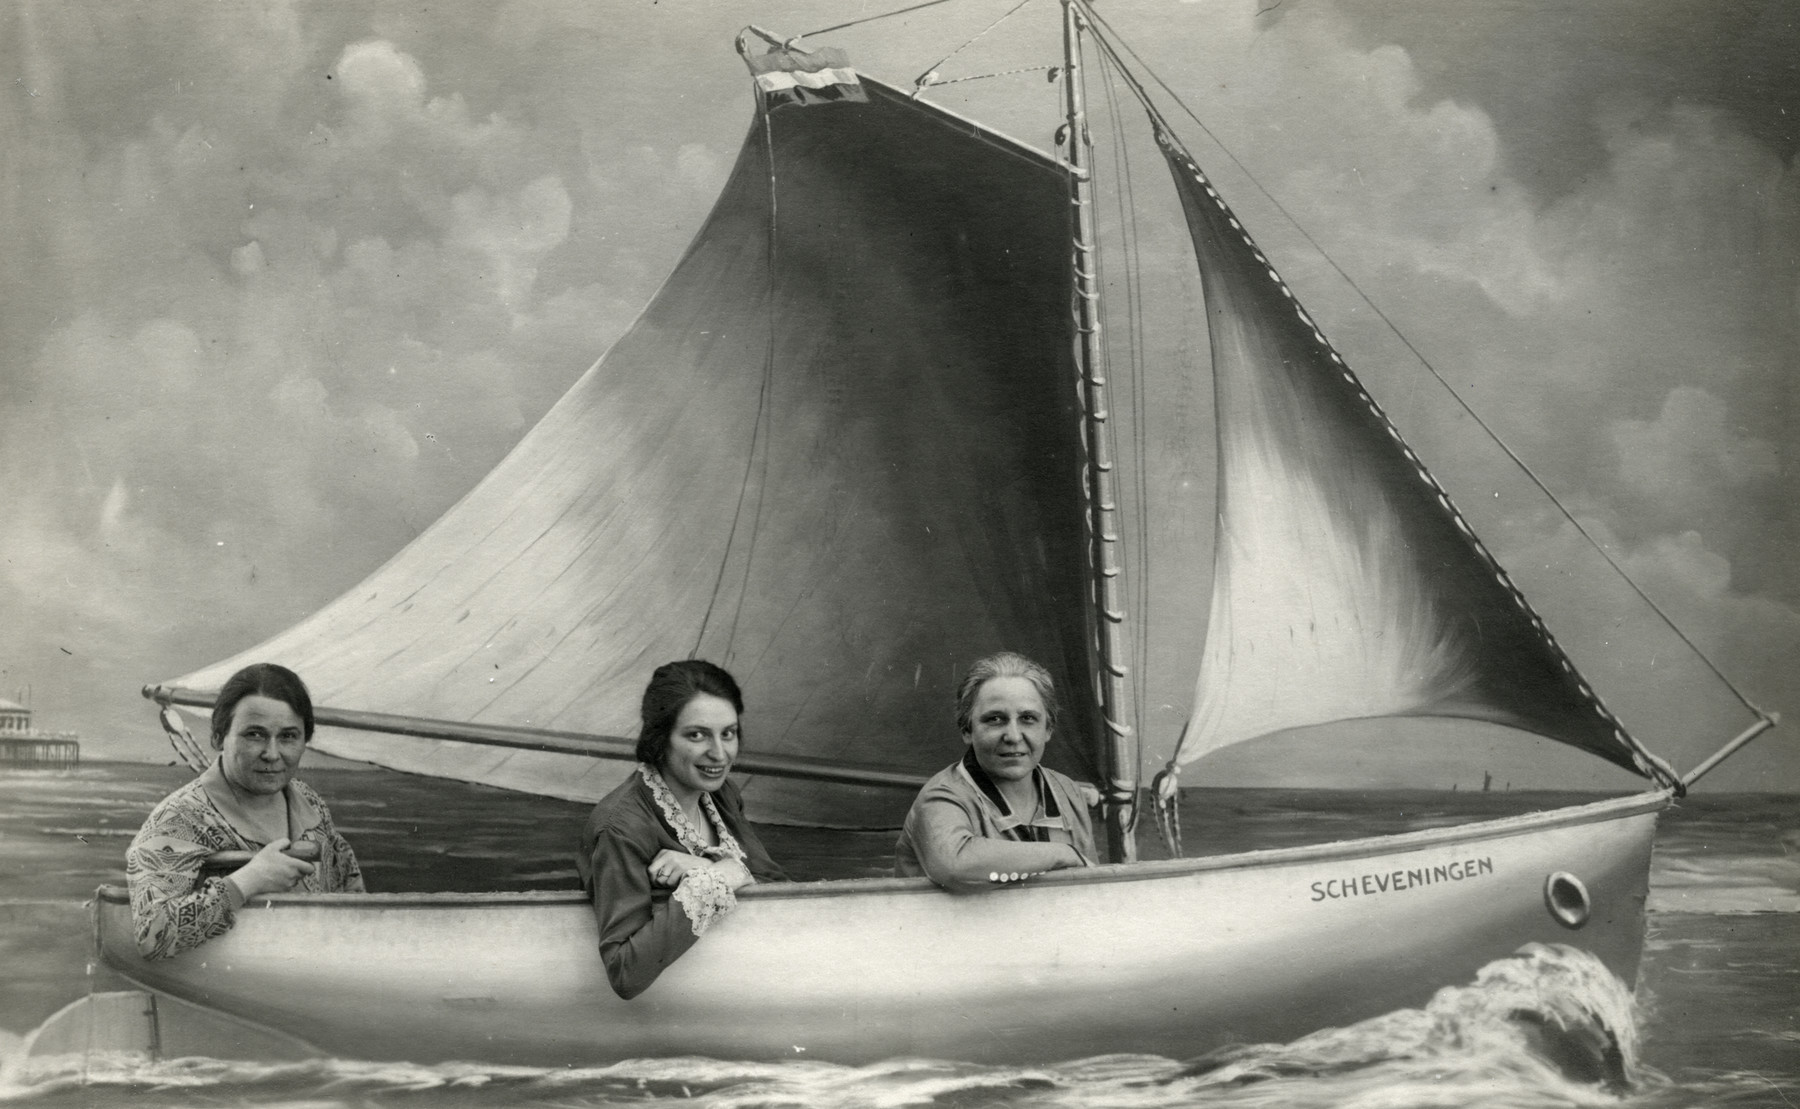 Studio portrait of three sisters on a pretend boat in Scheveningen, Holland.

Lotte van Collem Randerath is in the center.